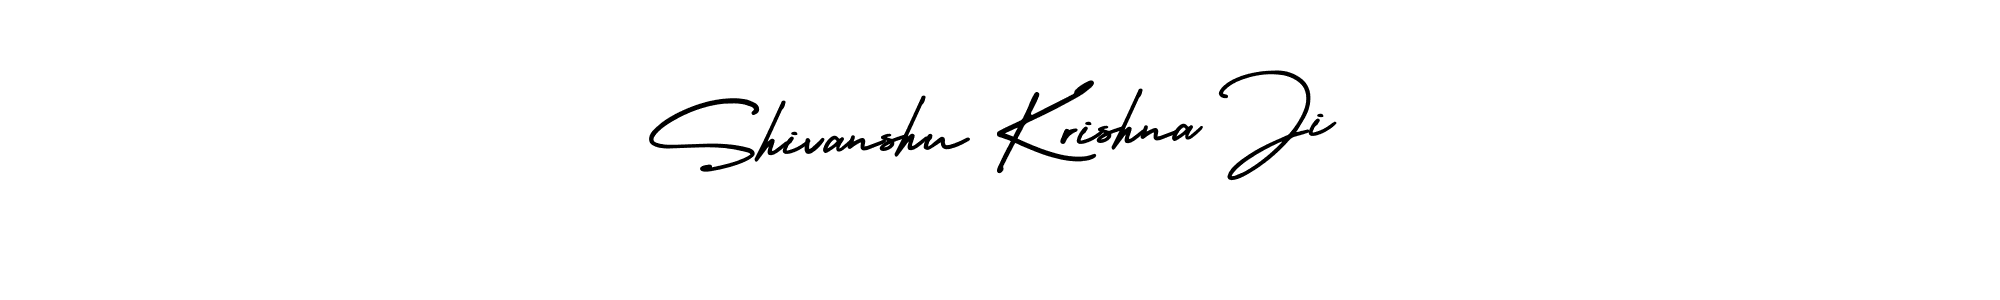 How to Draw Shivanshu Krishna Ji signature style? AmerikaSignatureDemo-Regular is a latest design signature styles for name Shivanshu Krishna Ji. Shivanshu Krishna Ji signature style 3 images and pictures png